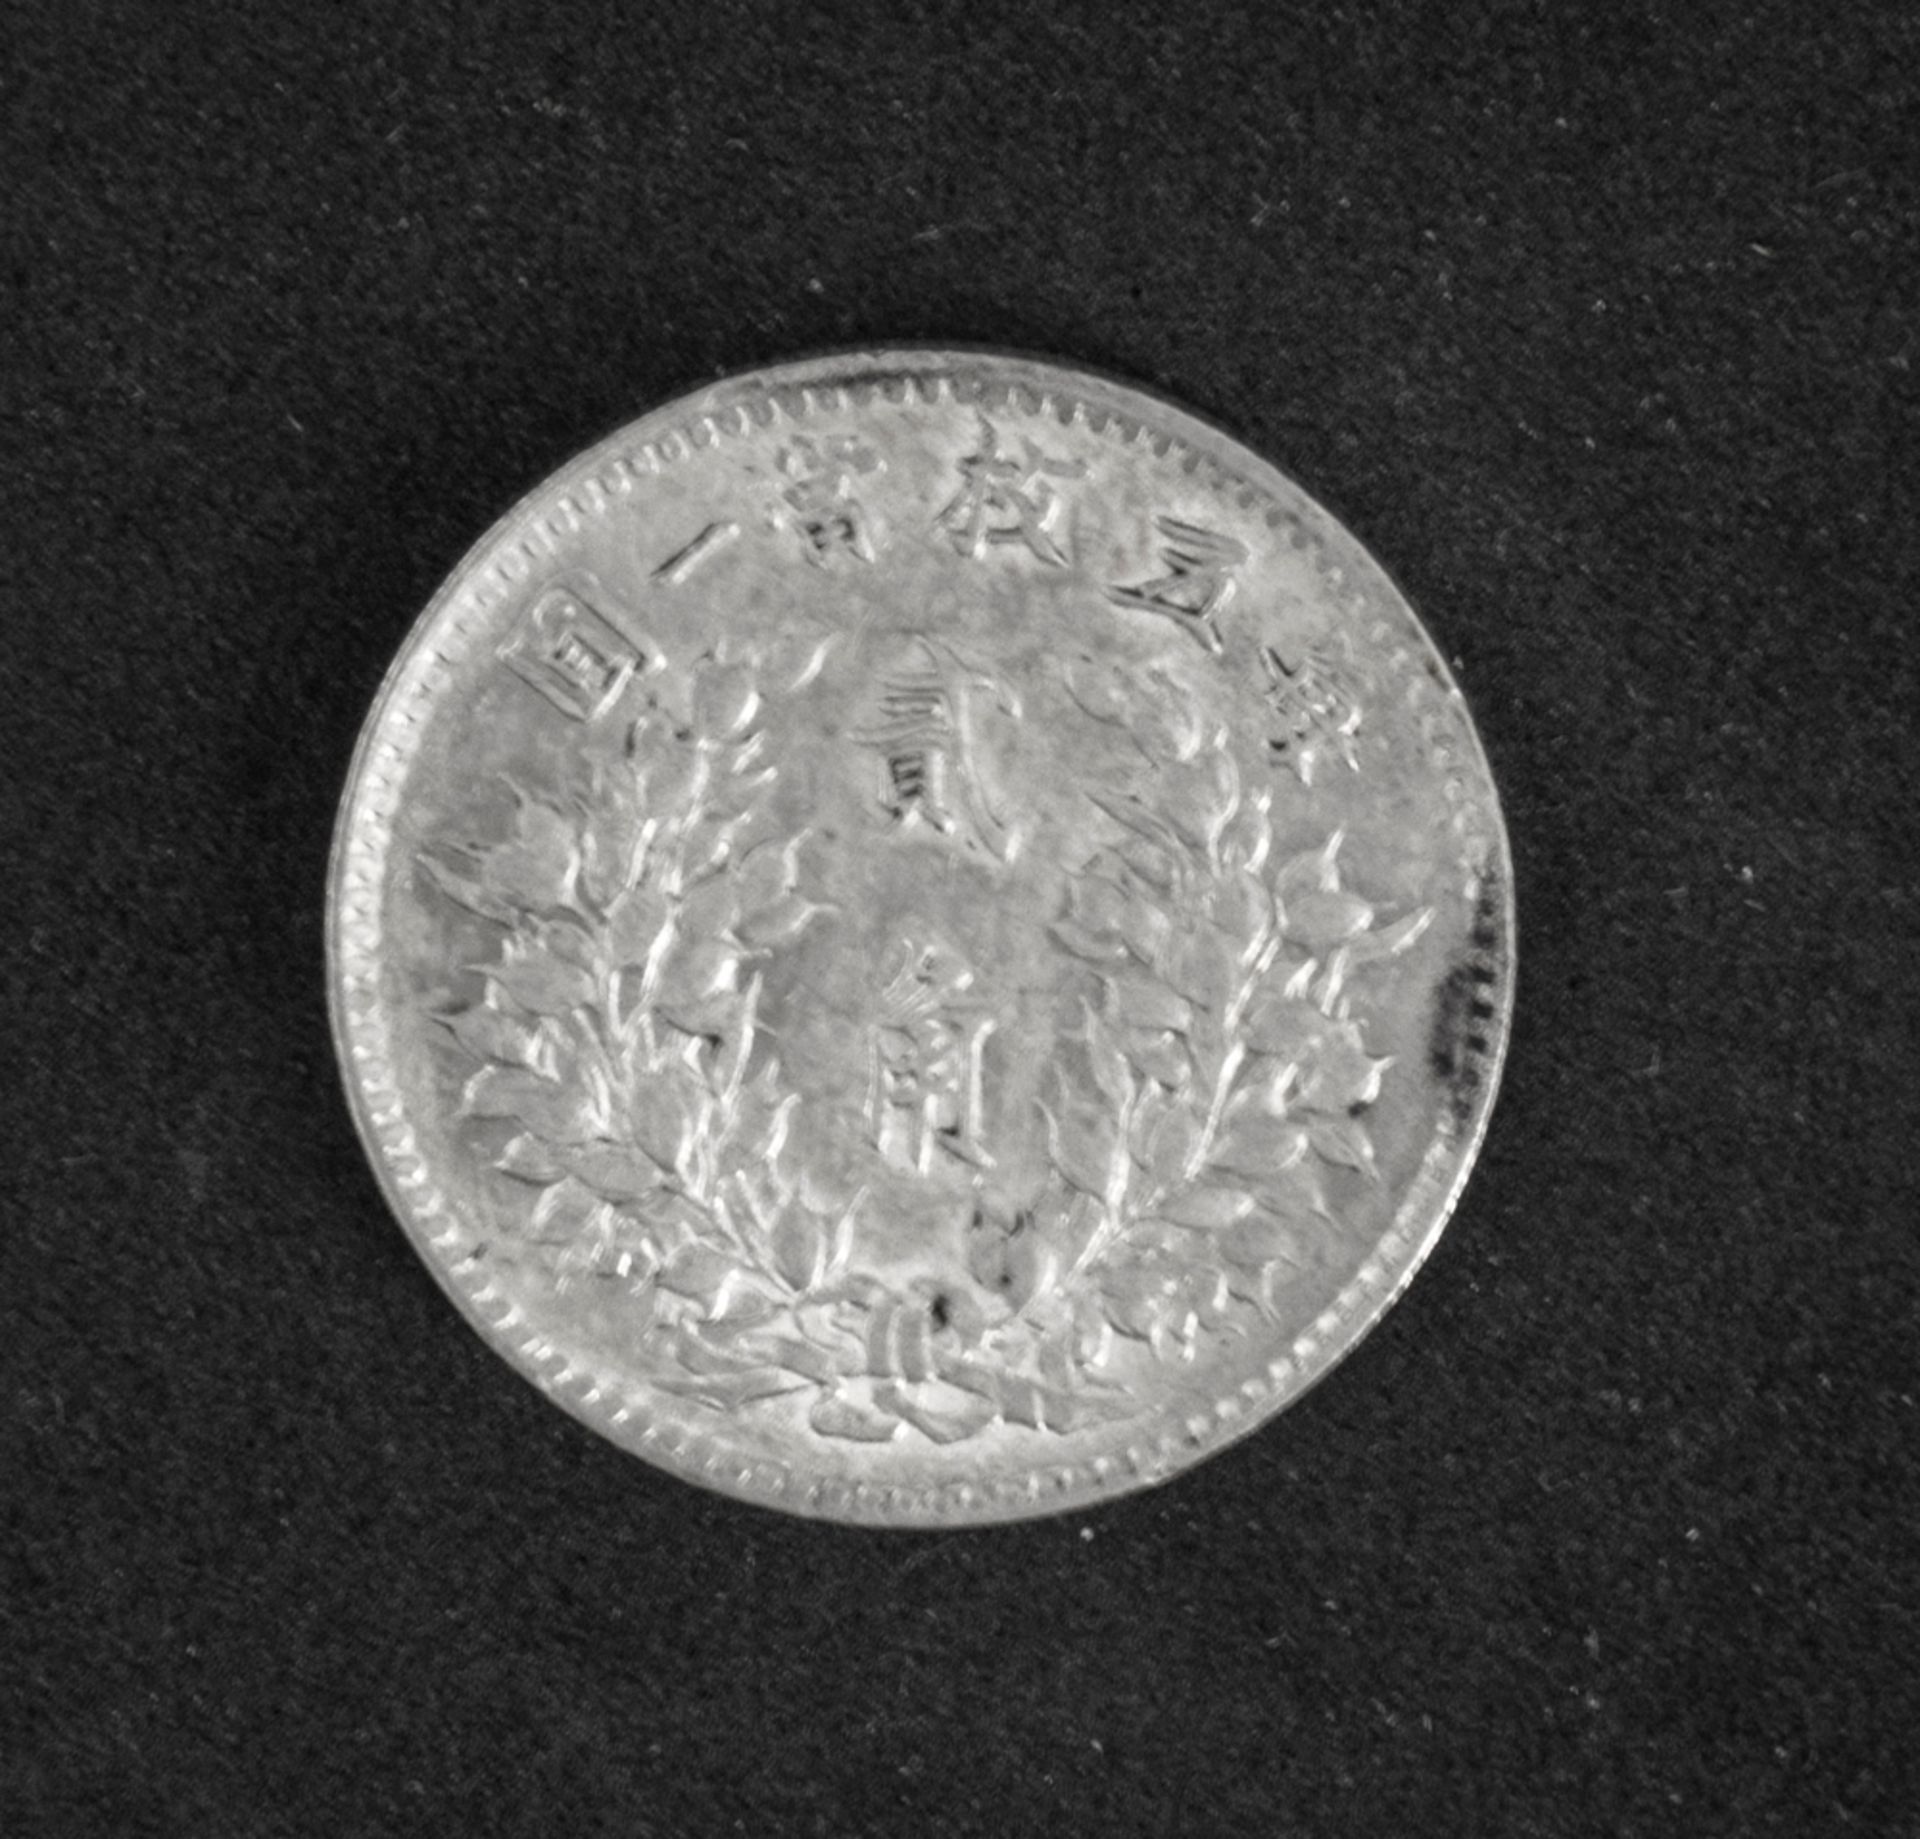 China Republik 1914/1920, 2 Jiao - Silbermünze. Erhaltung: ss. - Image 2 of 2